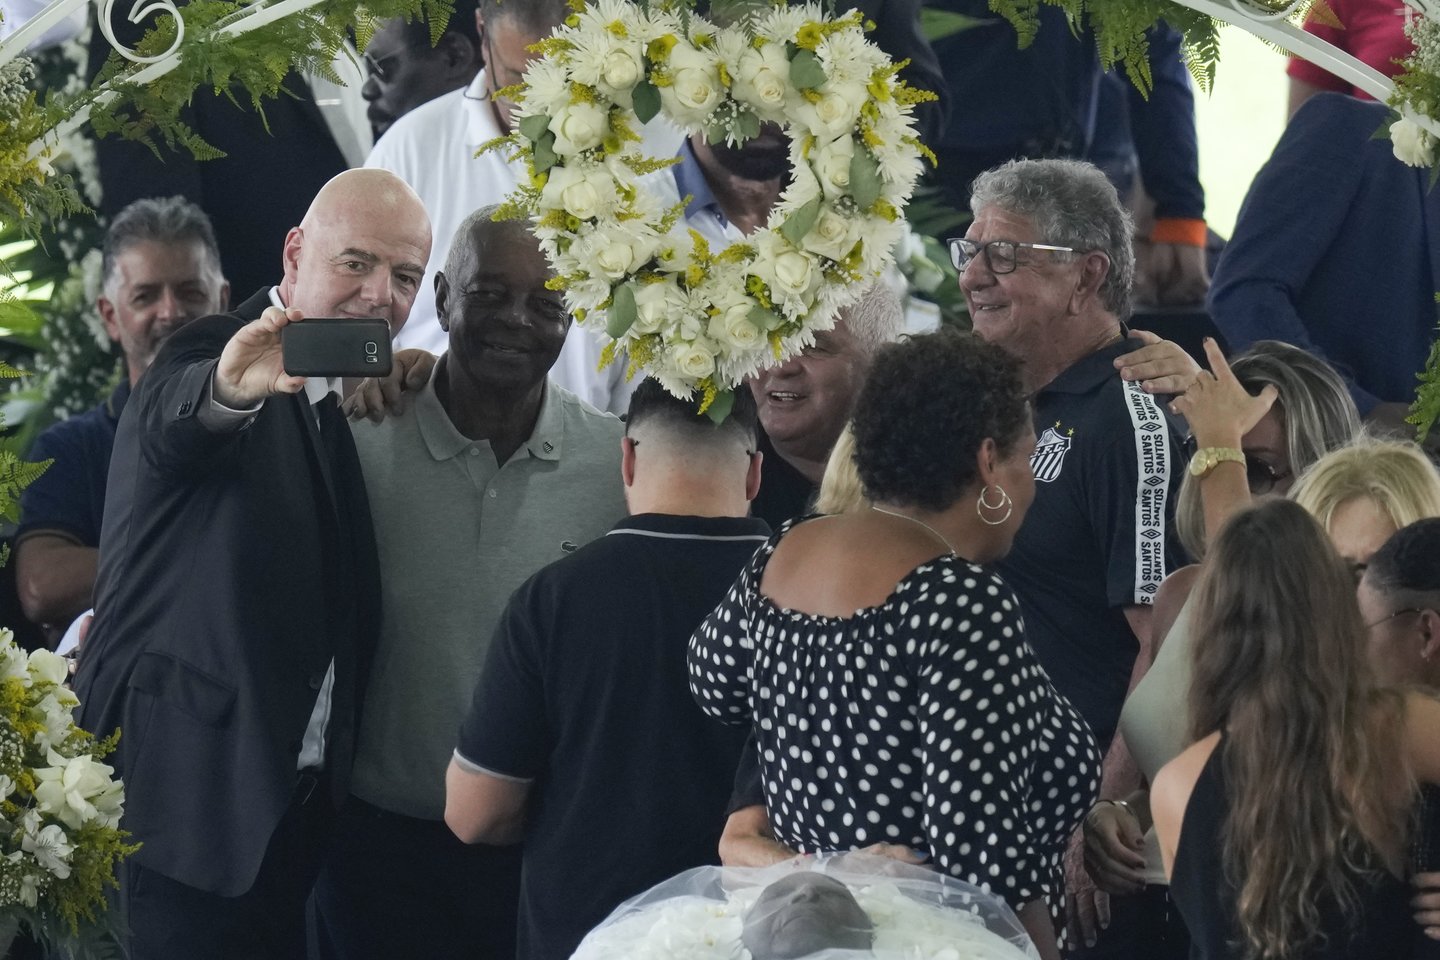  Gianni Infantino dalyvavo Pele laidotuvėse.<br> AFP/Scanpix nuotr.